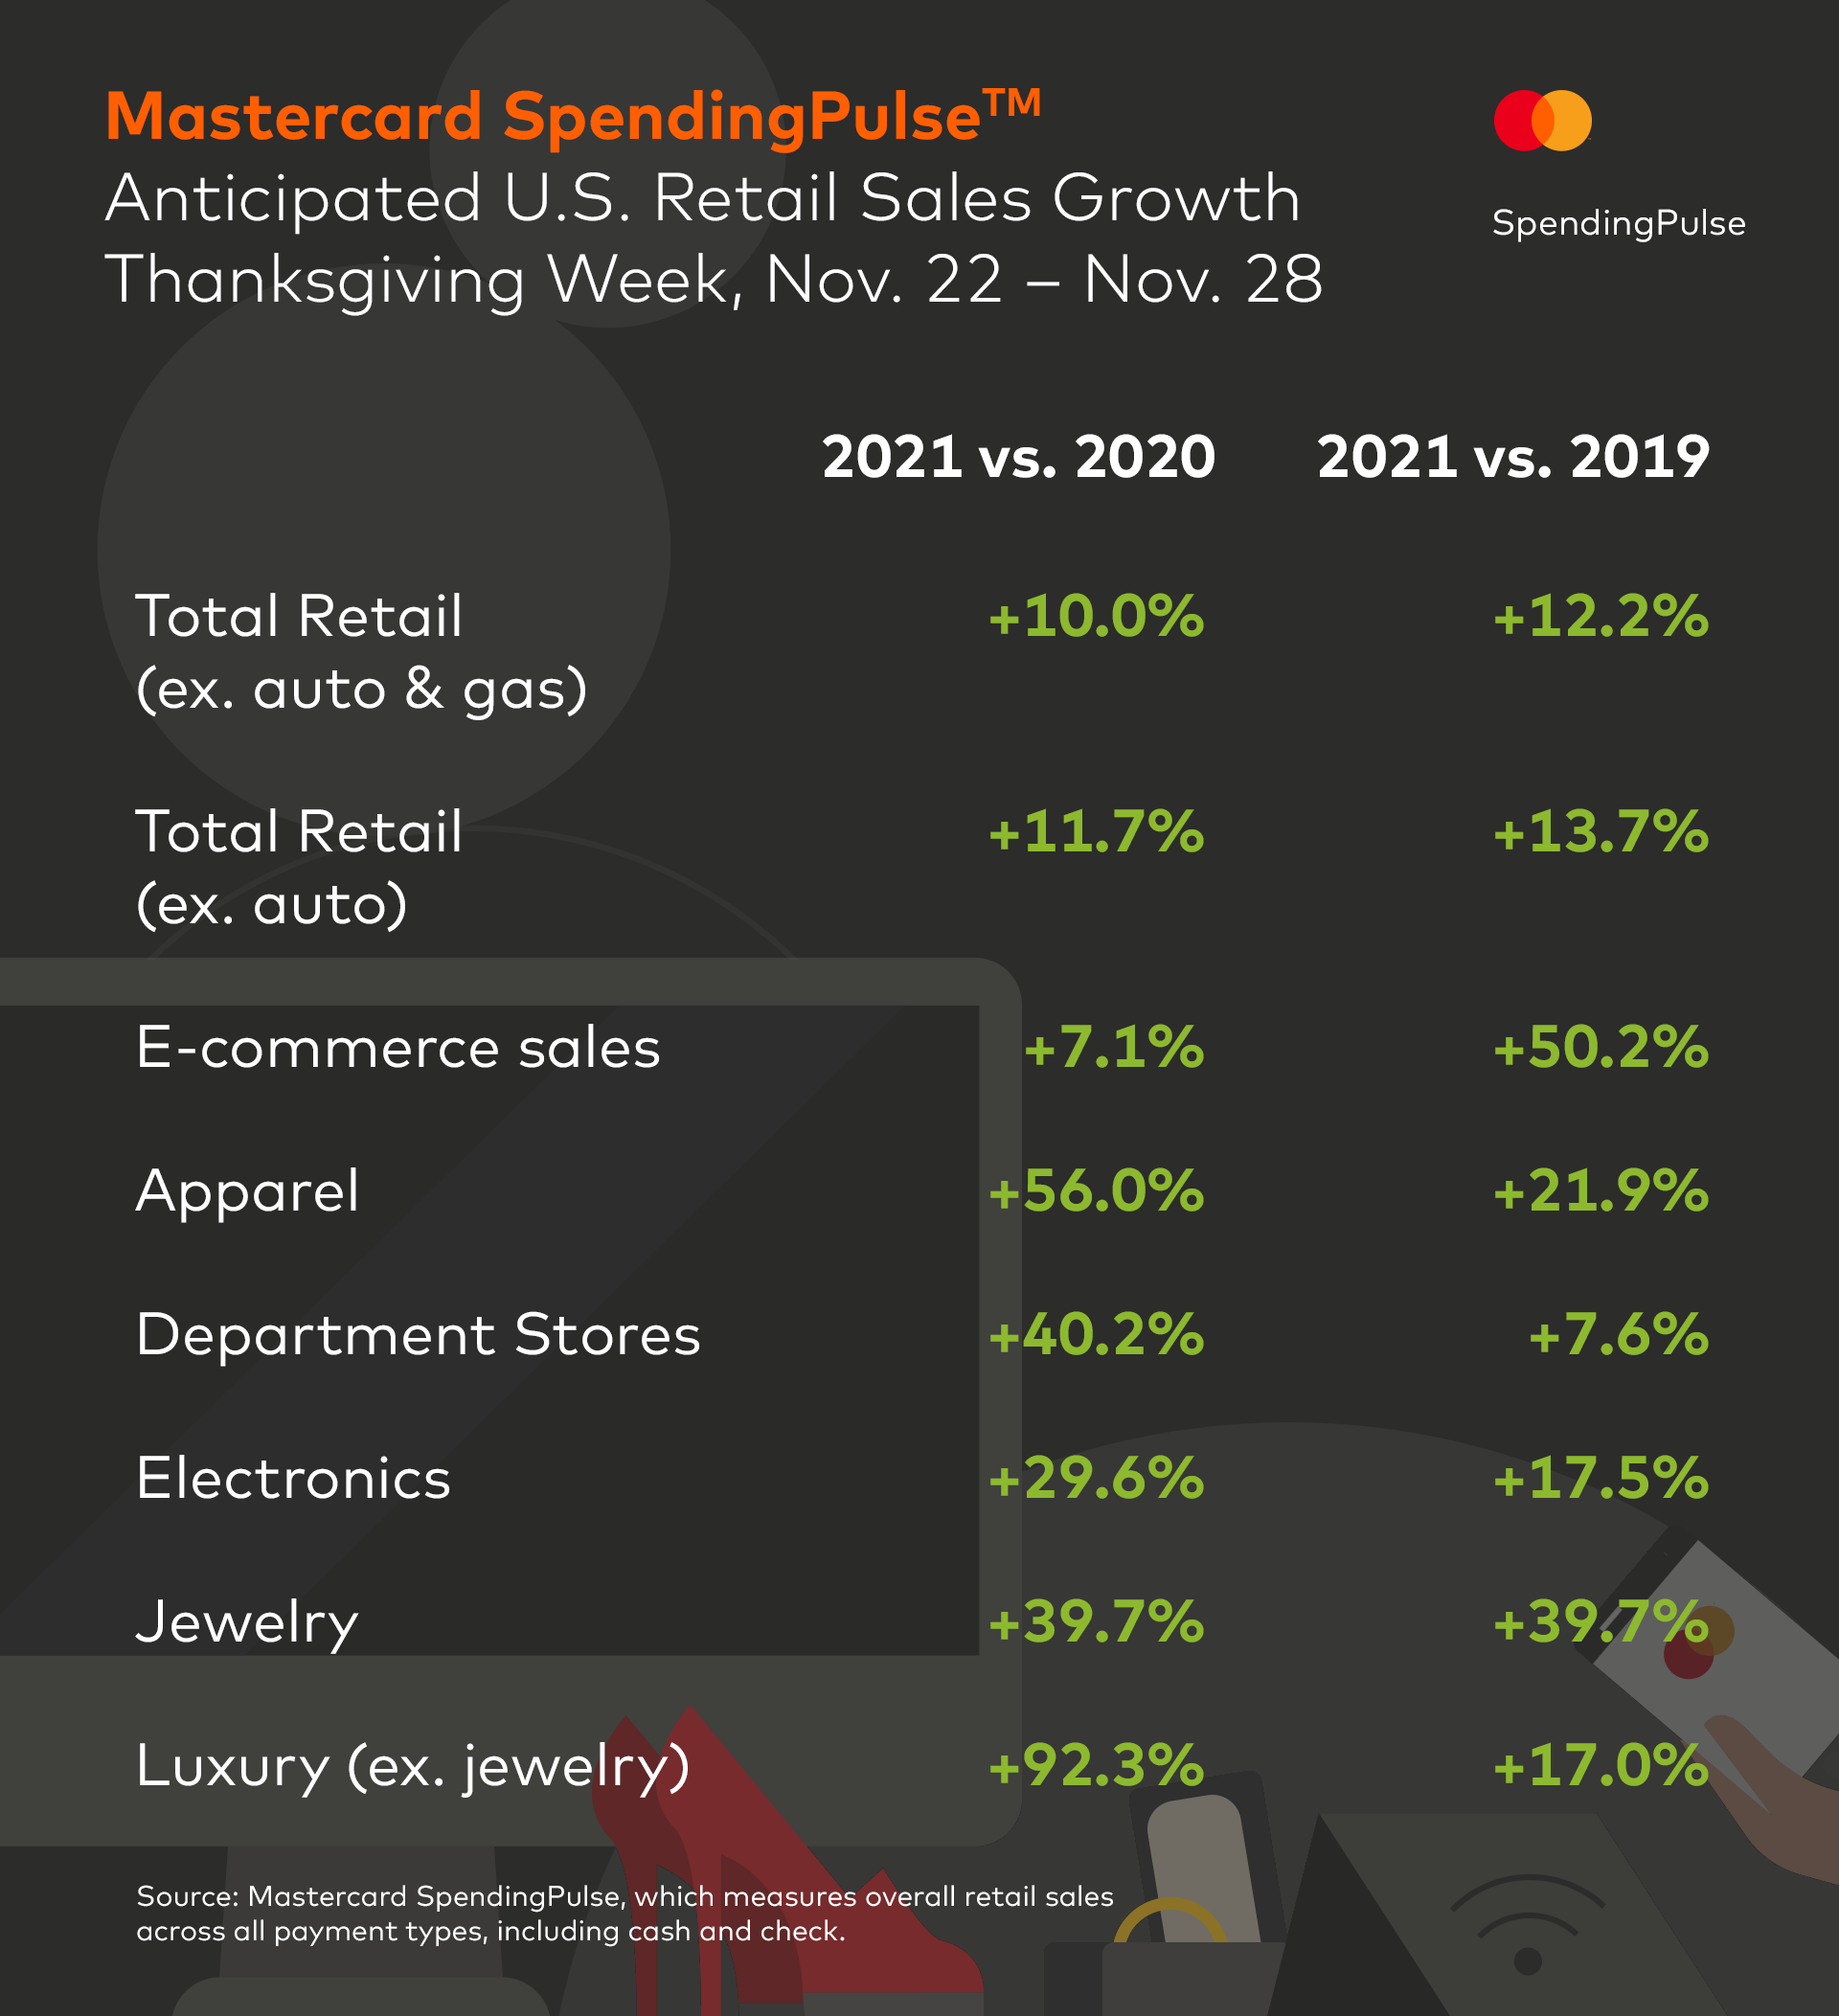 Mastercard SpendingPulse Anticipates 10 U.S. Retail Sales Growth